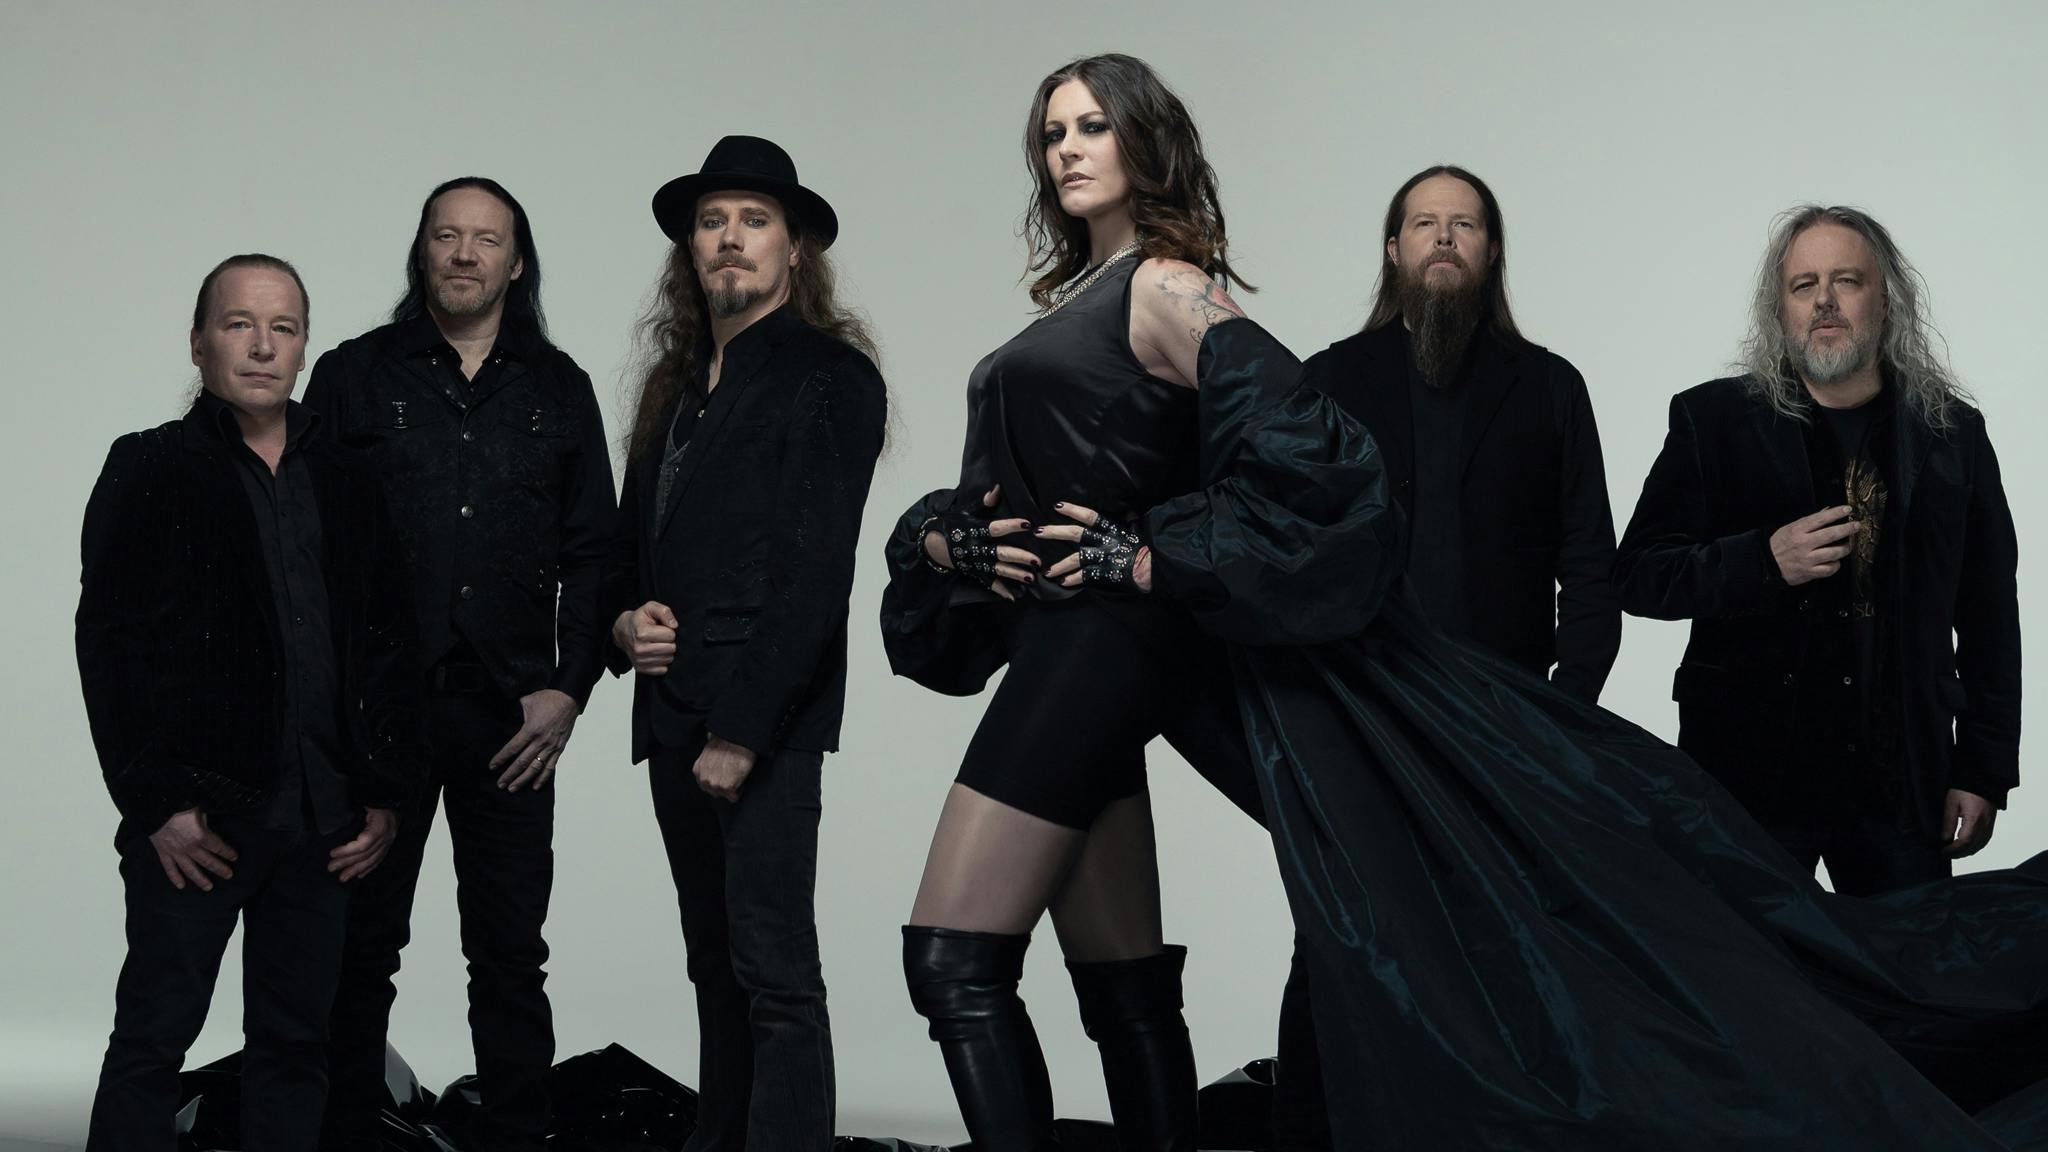 Nightwish have announced details of their 10th album, Yesterwynde